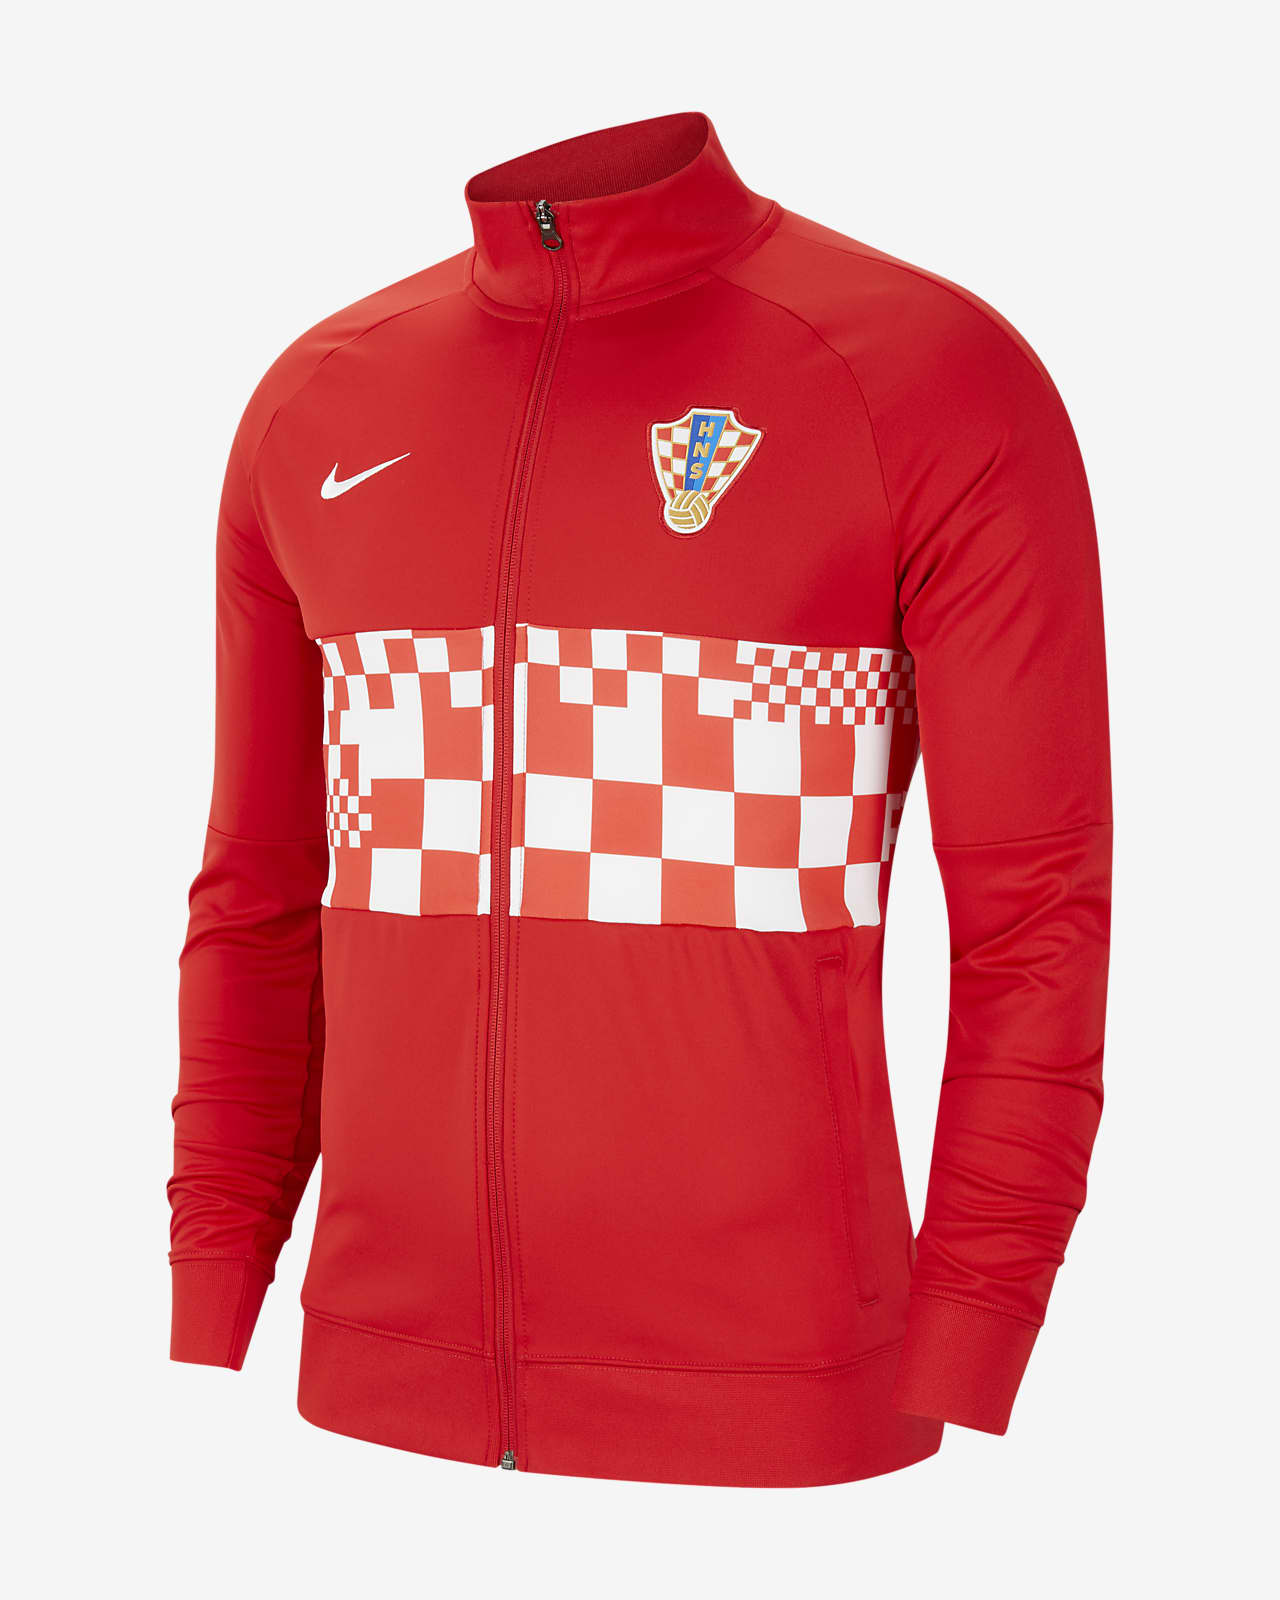 Croatia Men's Football Jacket